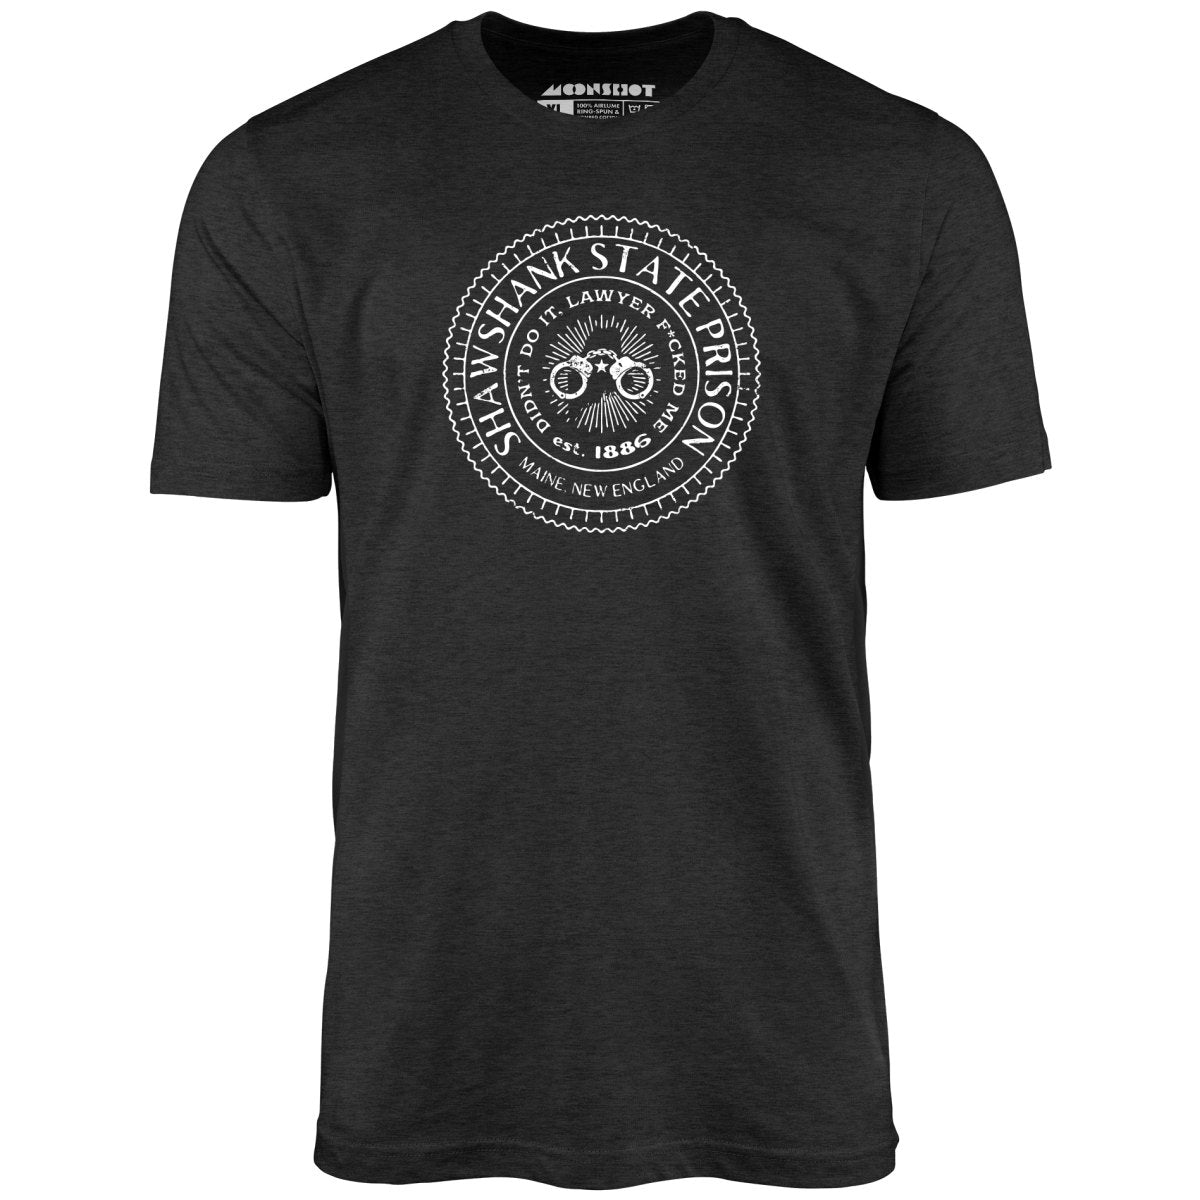 Shawshank State Prison - Unisex T-Shirt